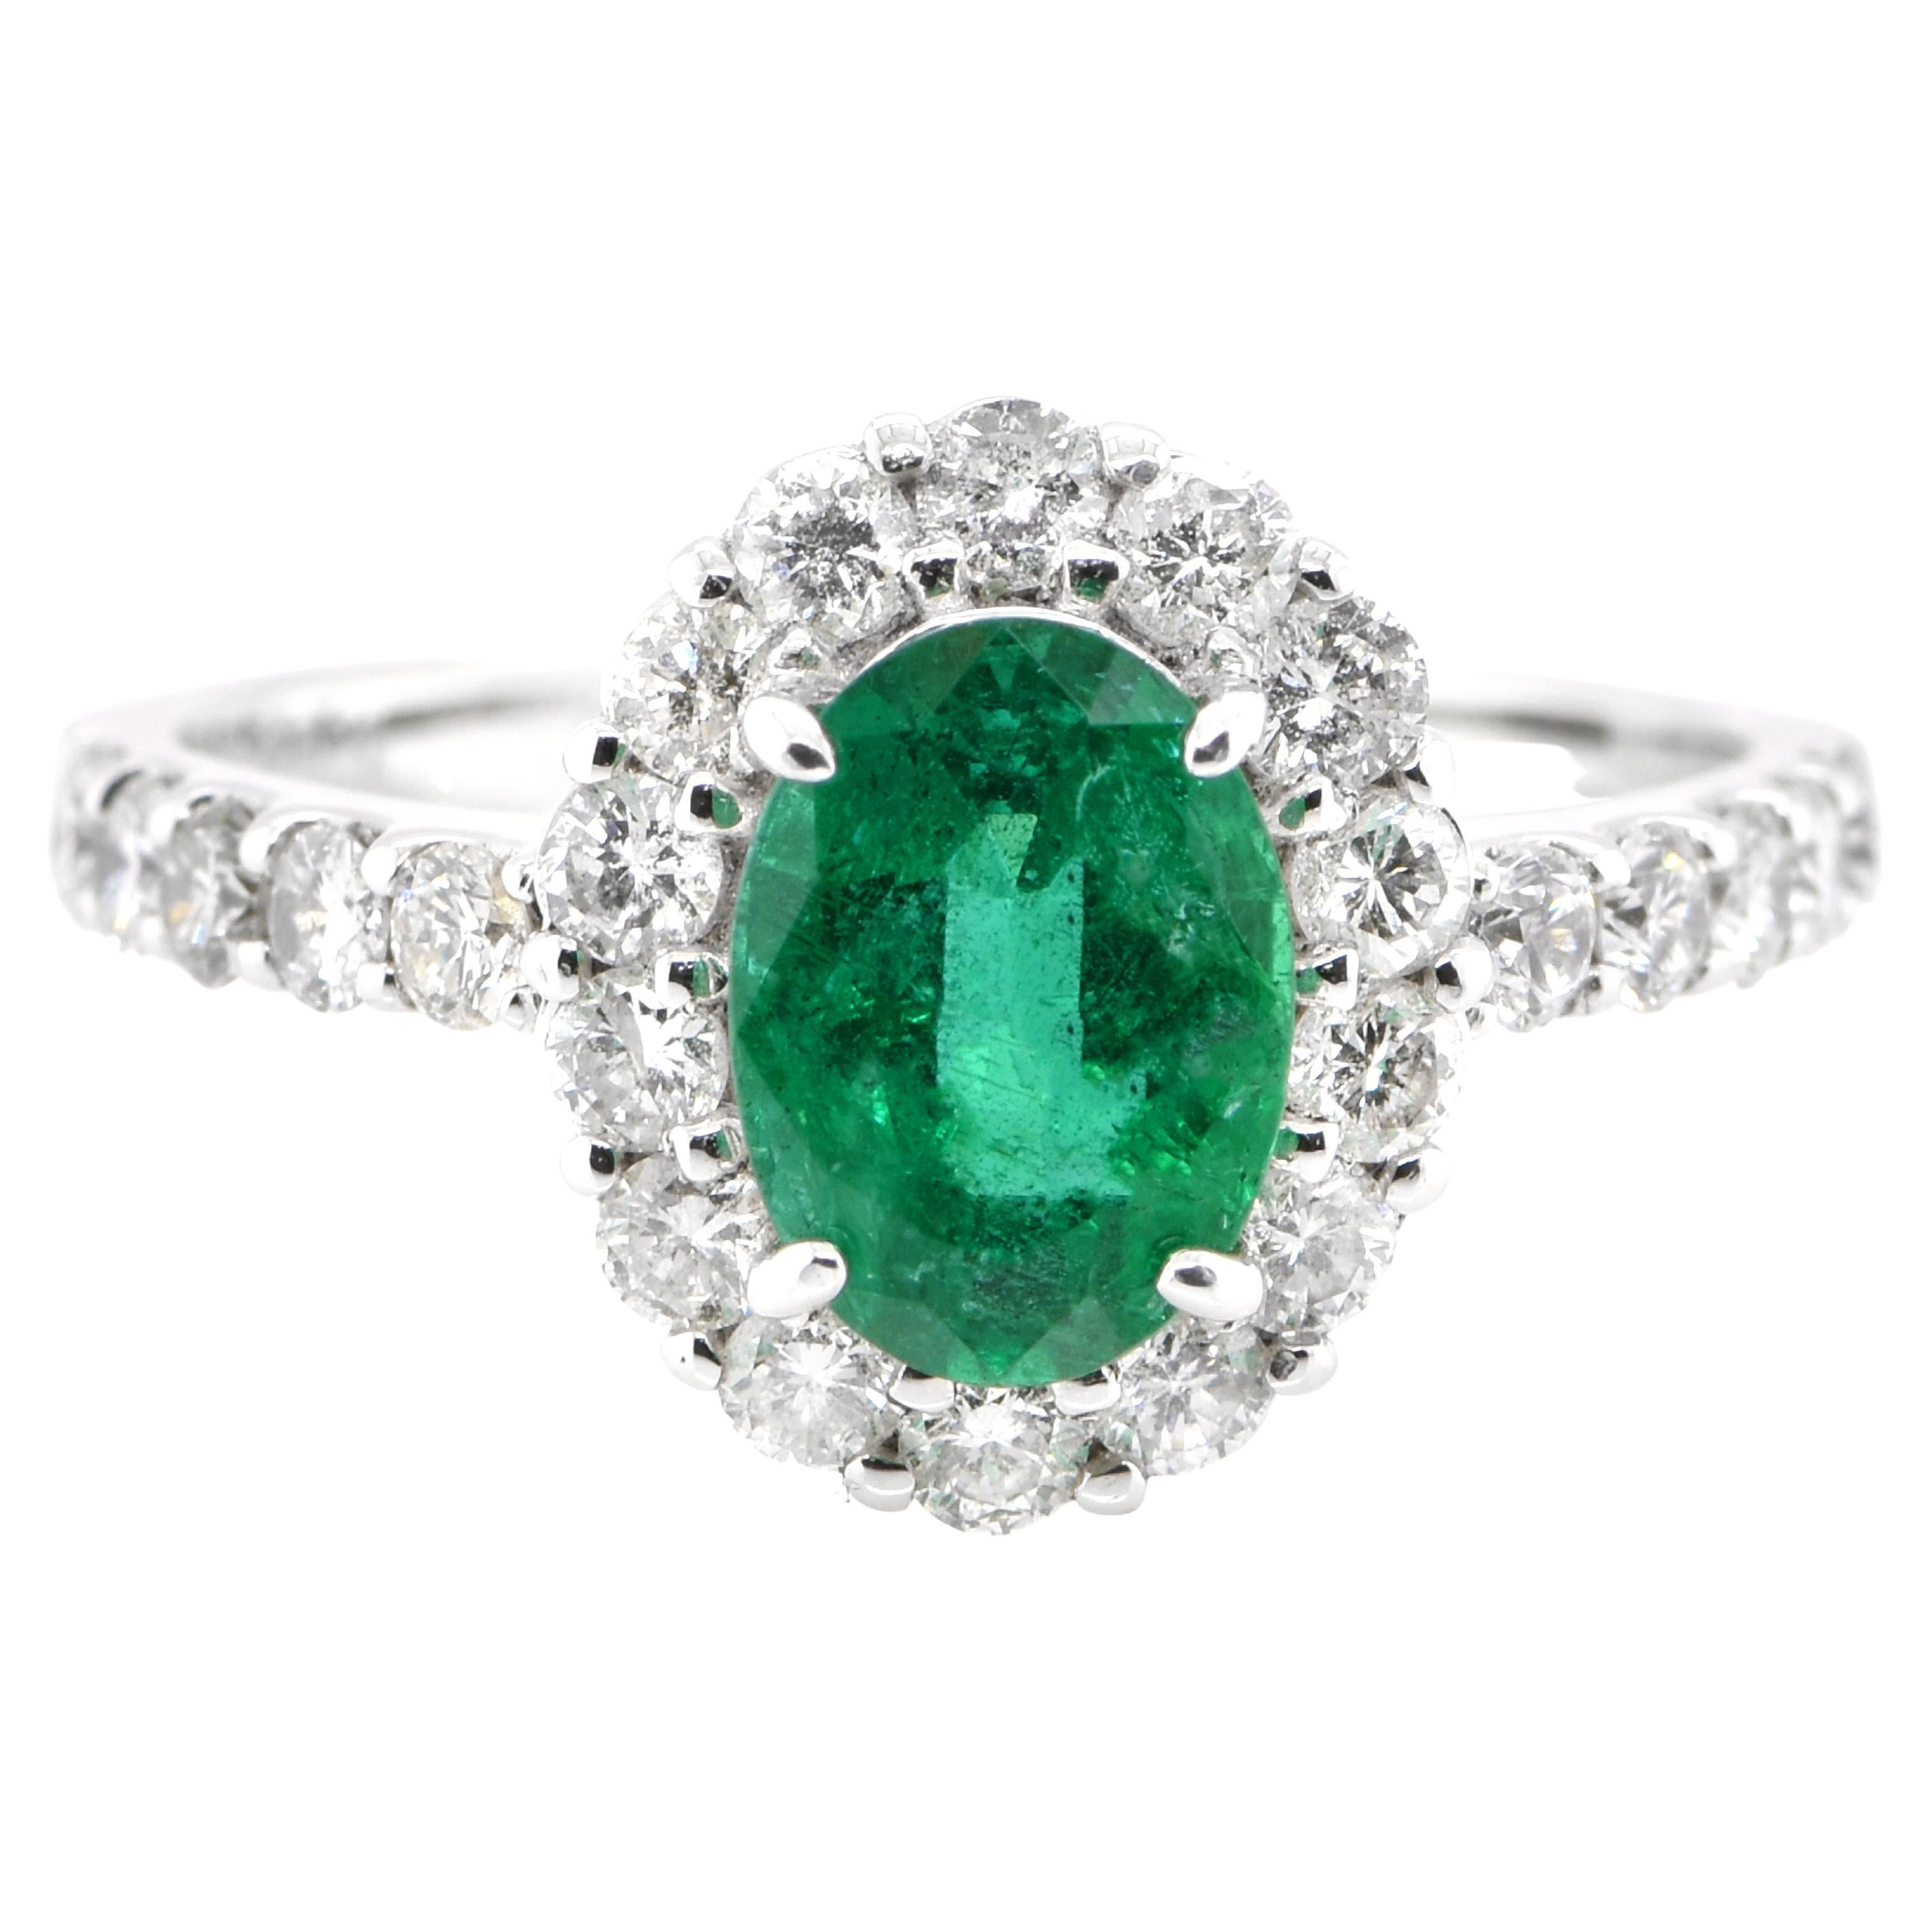 1.41 Carat Natural Emerald and Diamond Halo Ring Set in Platinum